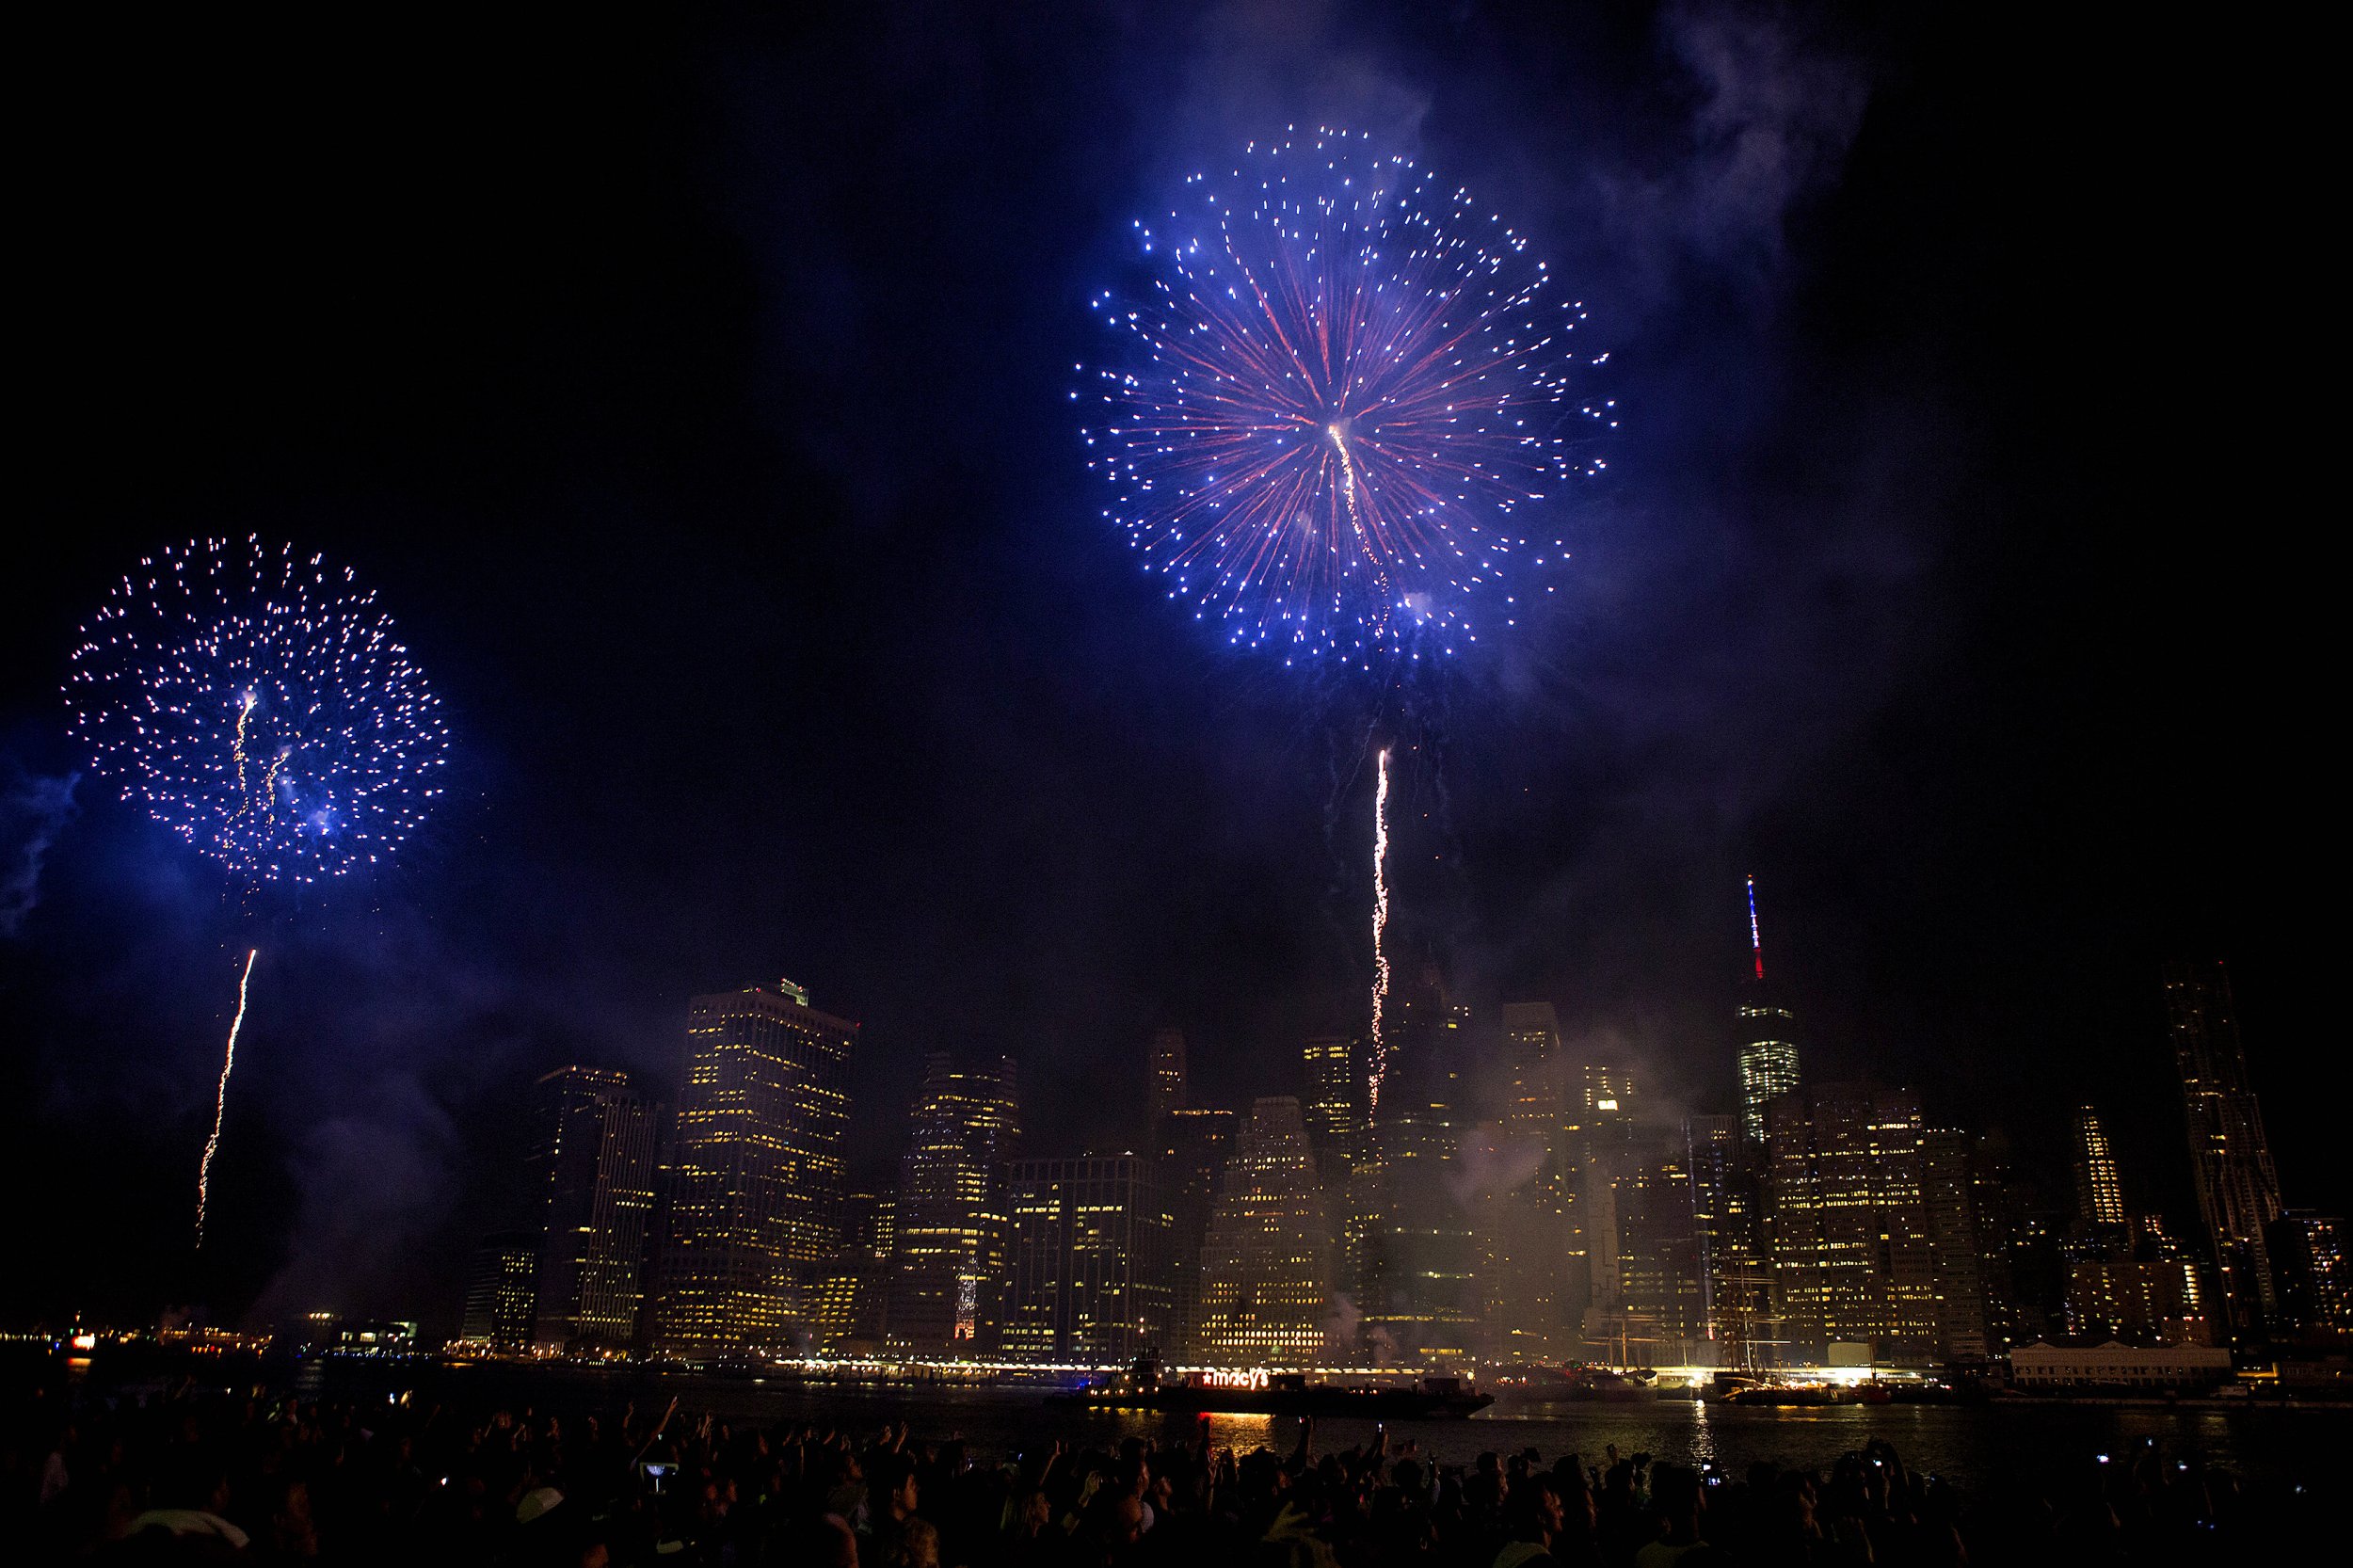 Macys Fourth of July Fireworks 2014 10